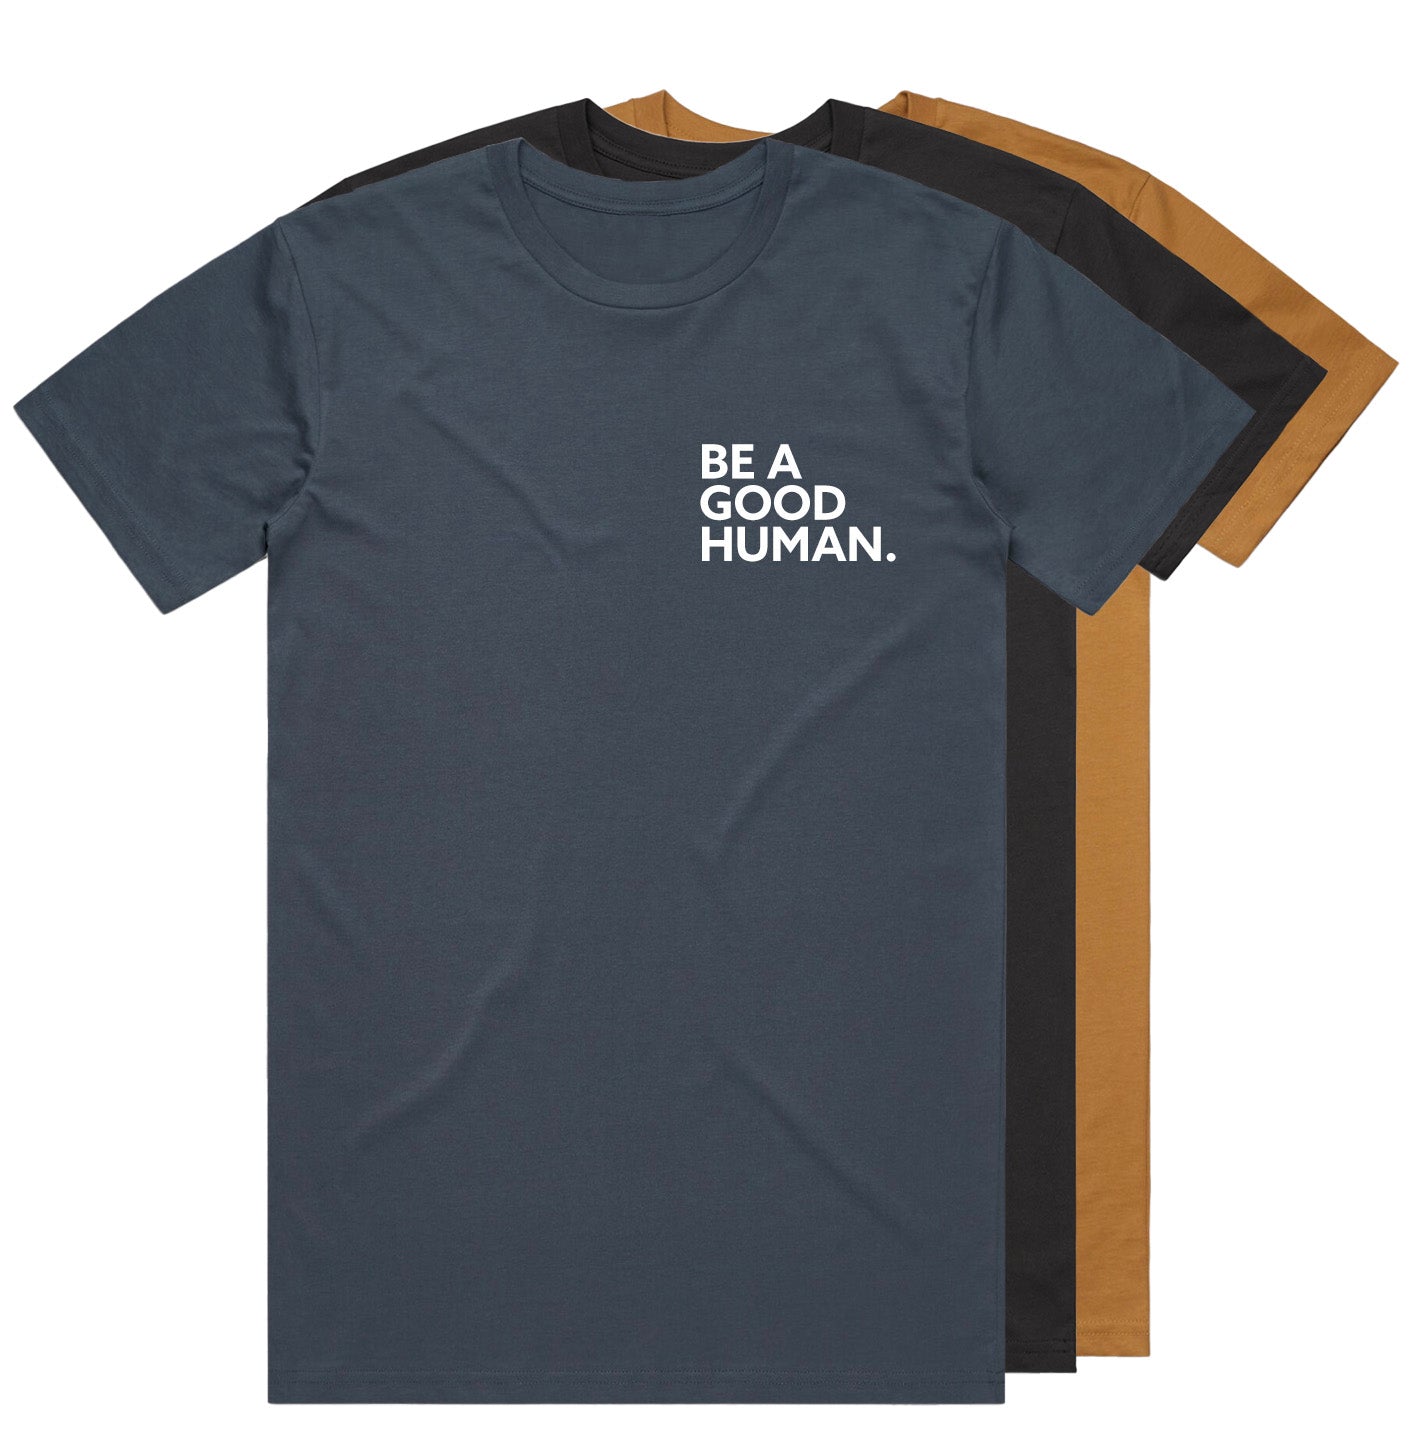 BE A GOOD HUMAN. - Men's T-Shirt